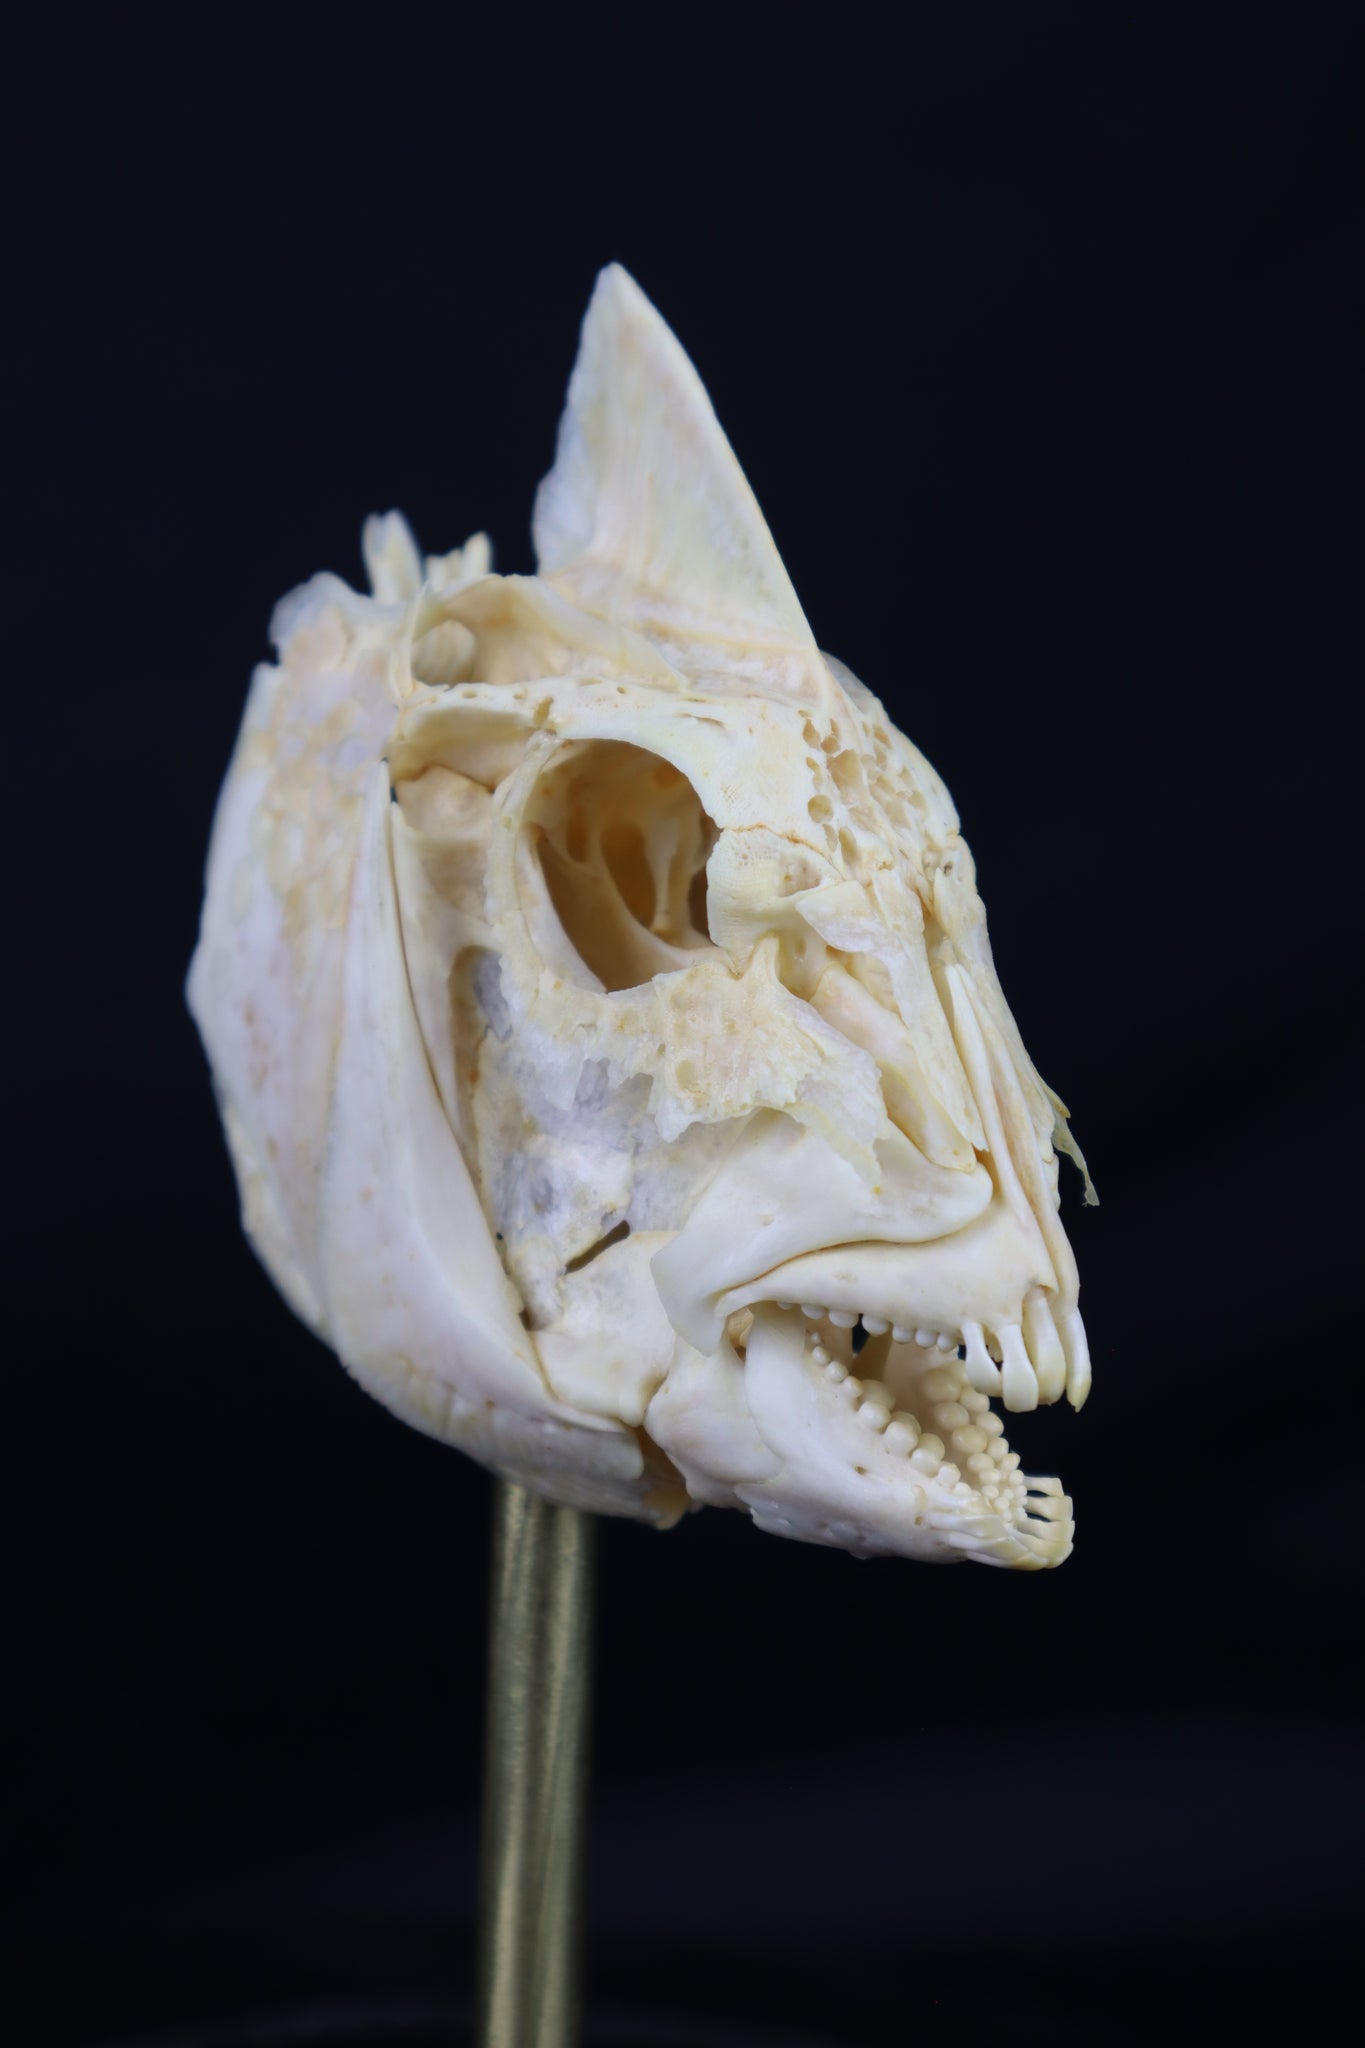 Sheepshead Fish Skull in Glass Dome